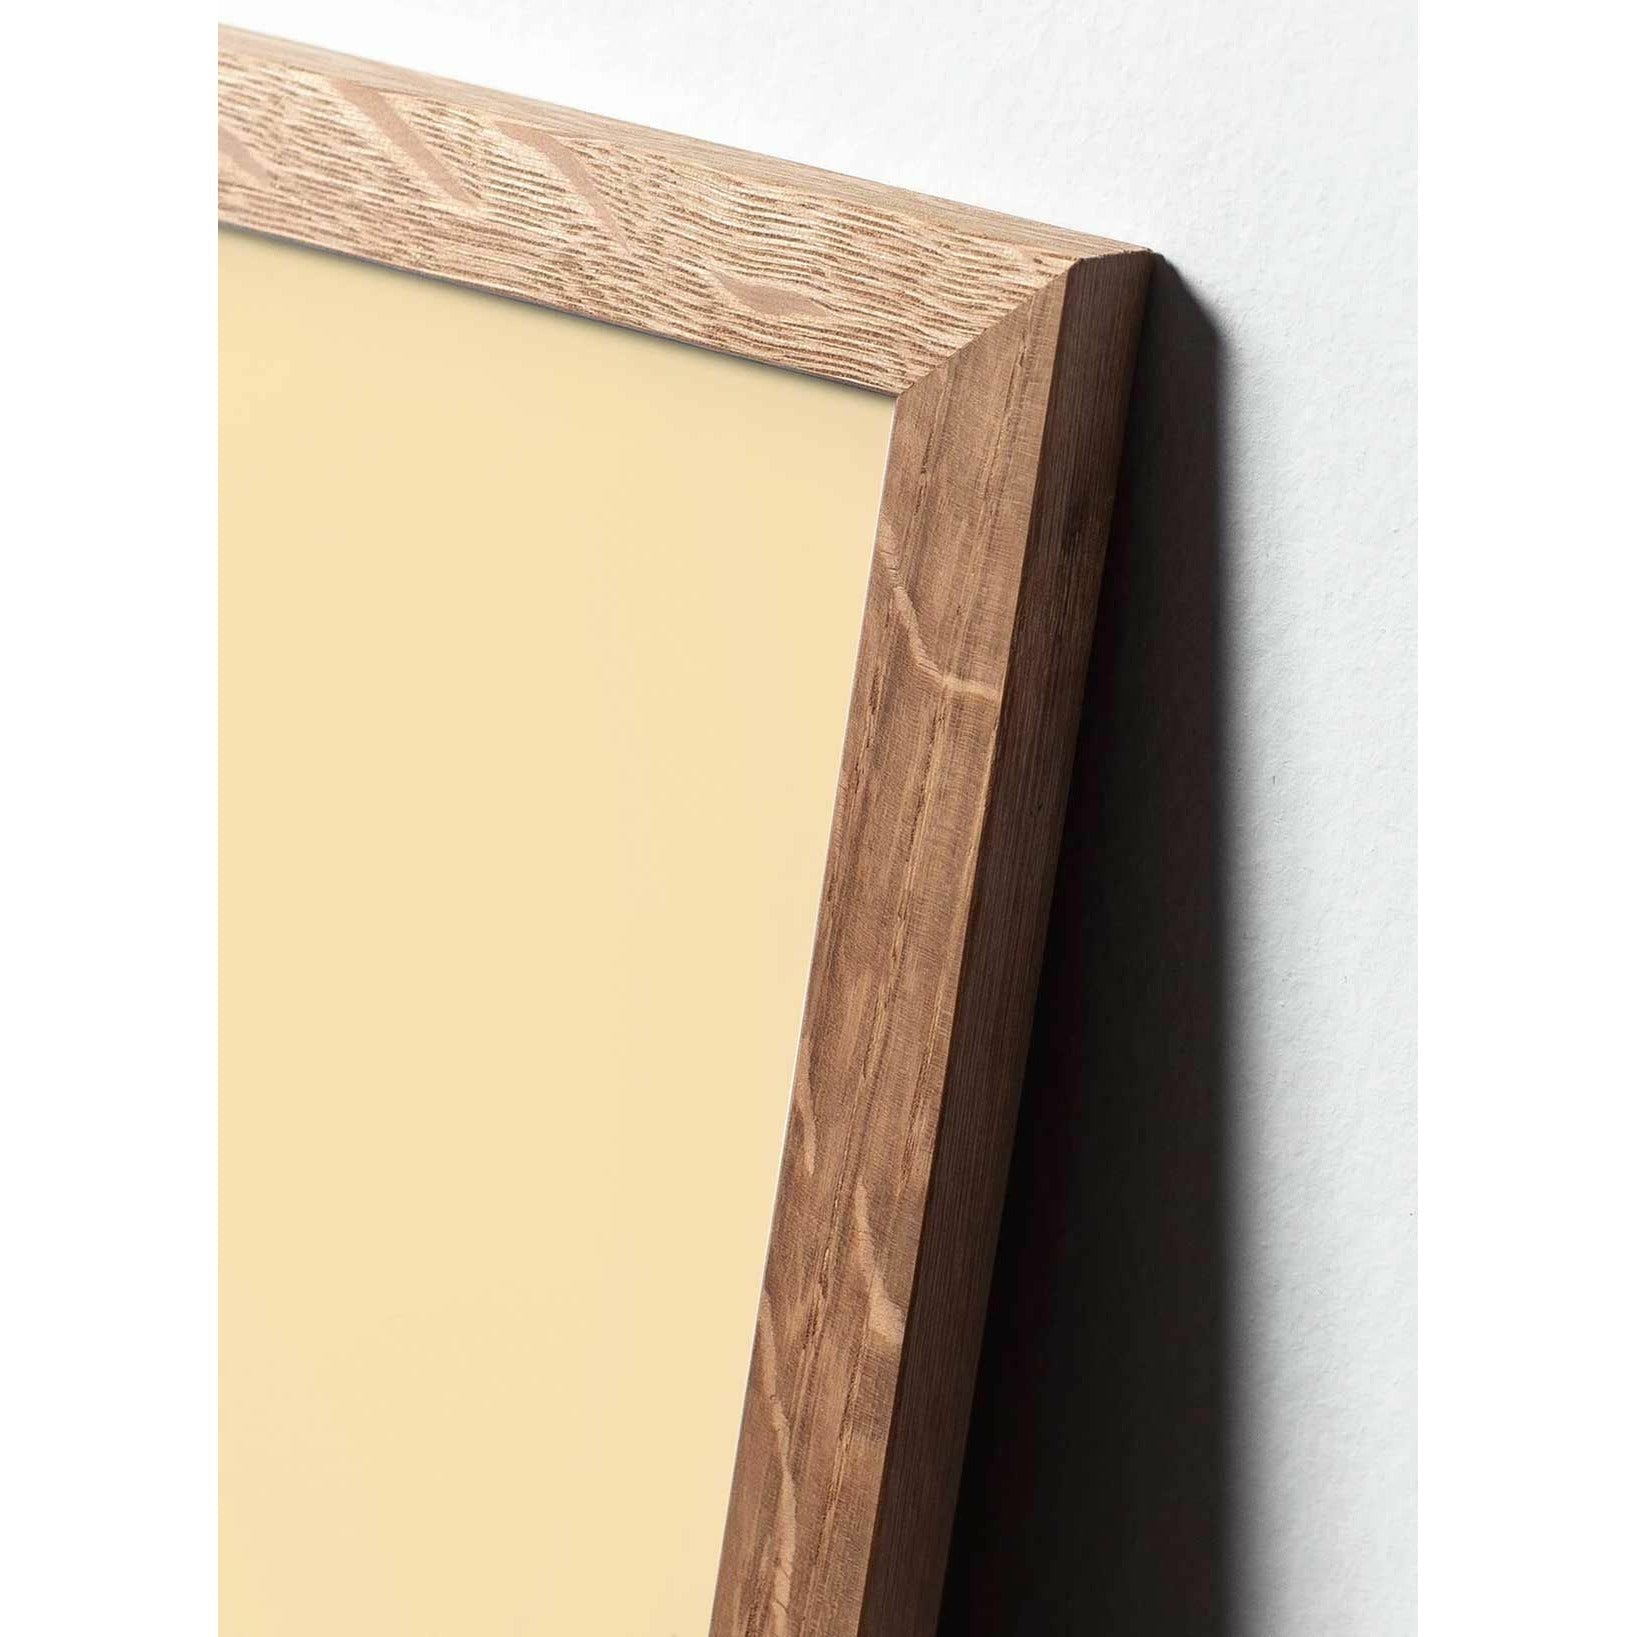 Póster clásico de cono de pino de creación, marco hecho de madera clara de 30x40 cm, fondo de color arena